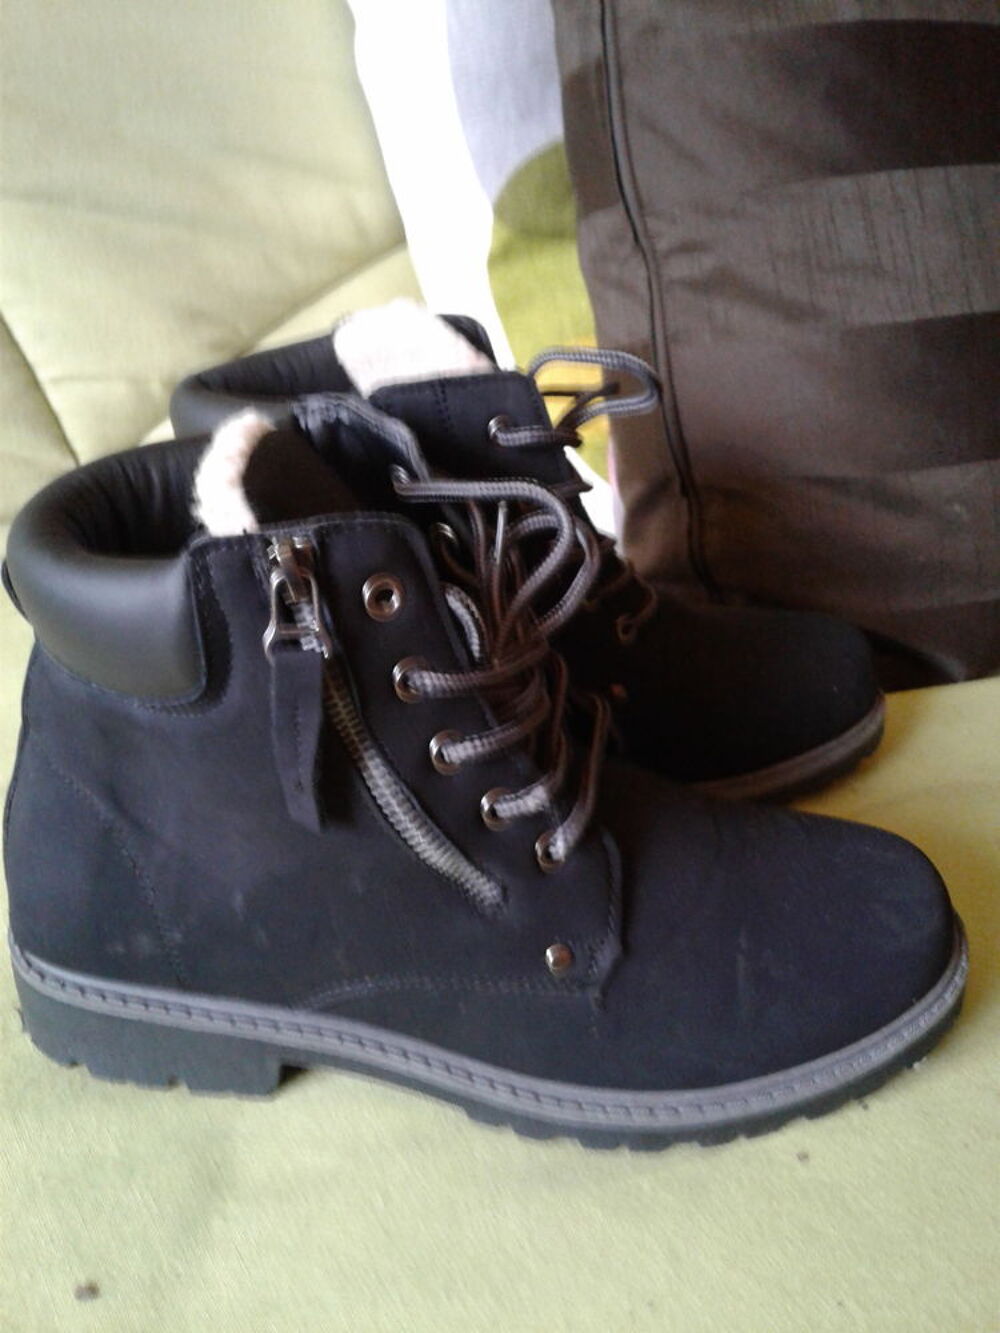 Chaussures noires - neuves - pointure 40 Chaussures